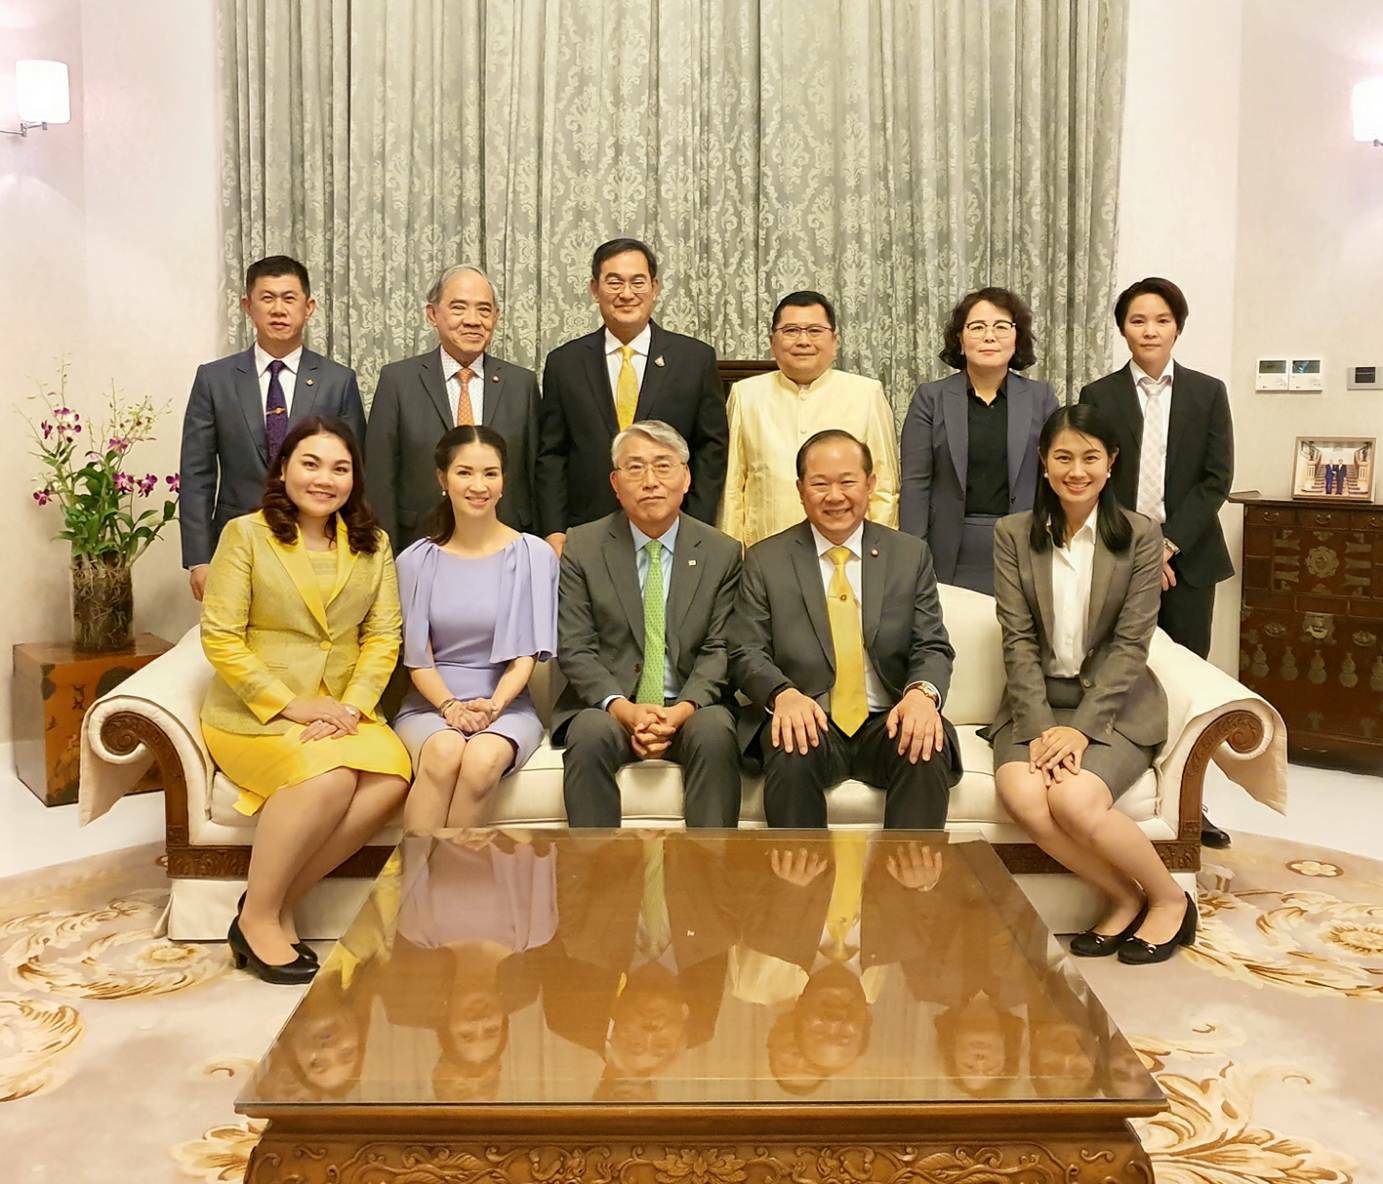 6 January 2020, at the Residence of the Ambassador of the Republic of Korea to the Kingdom of Thailand, Bangkok